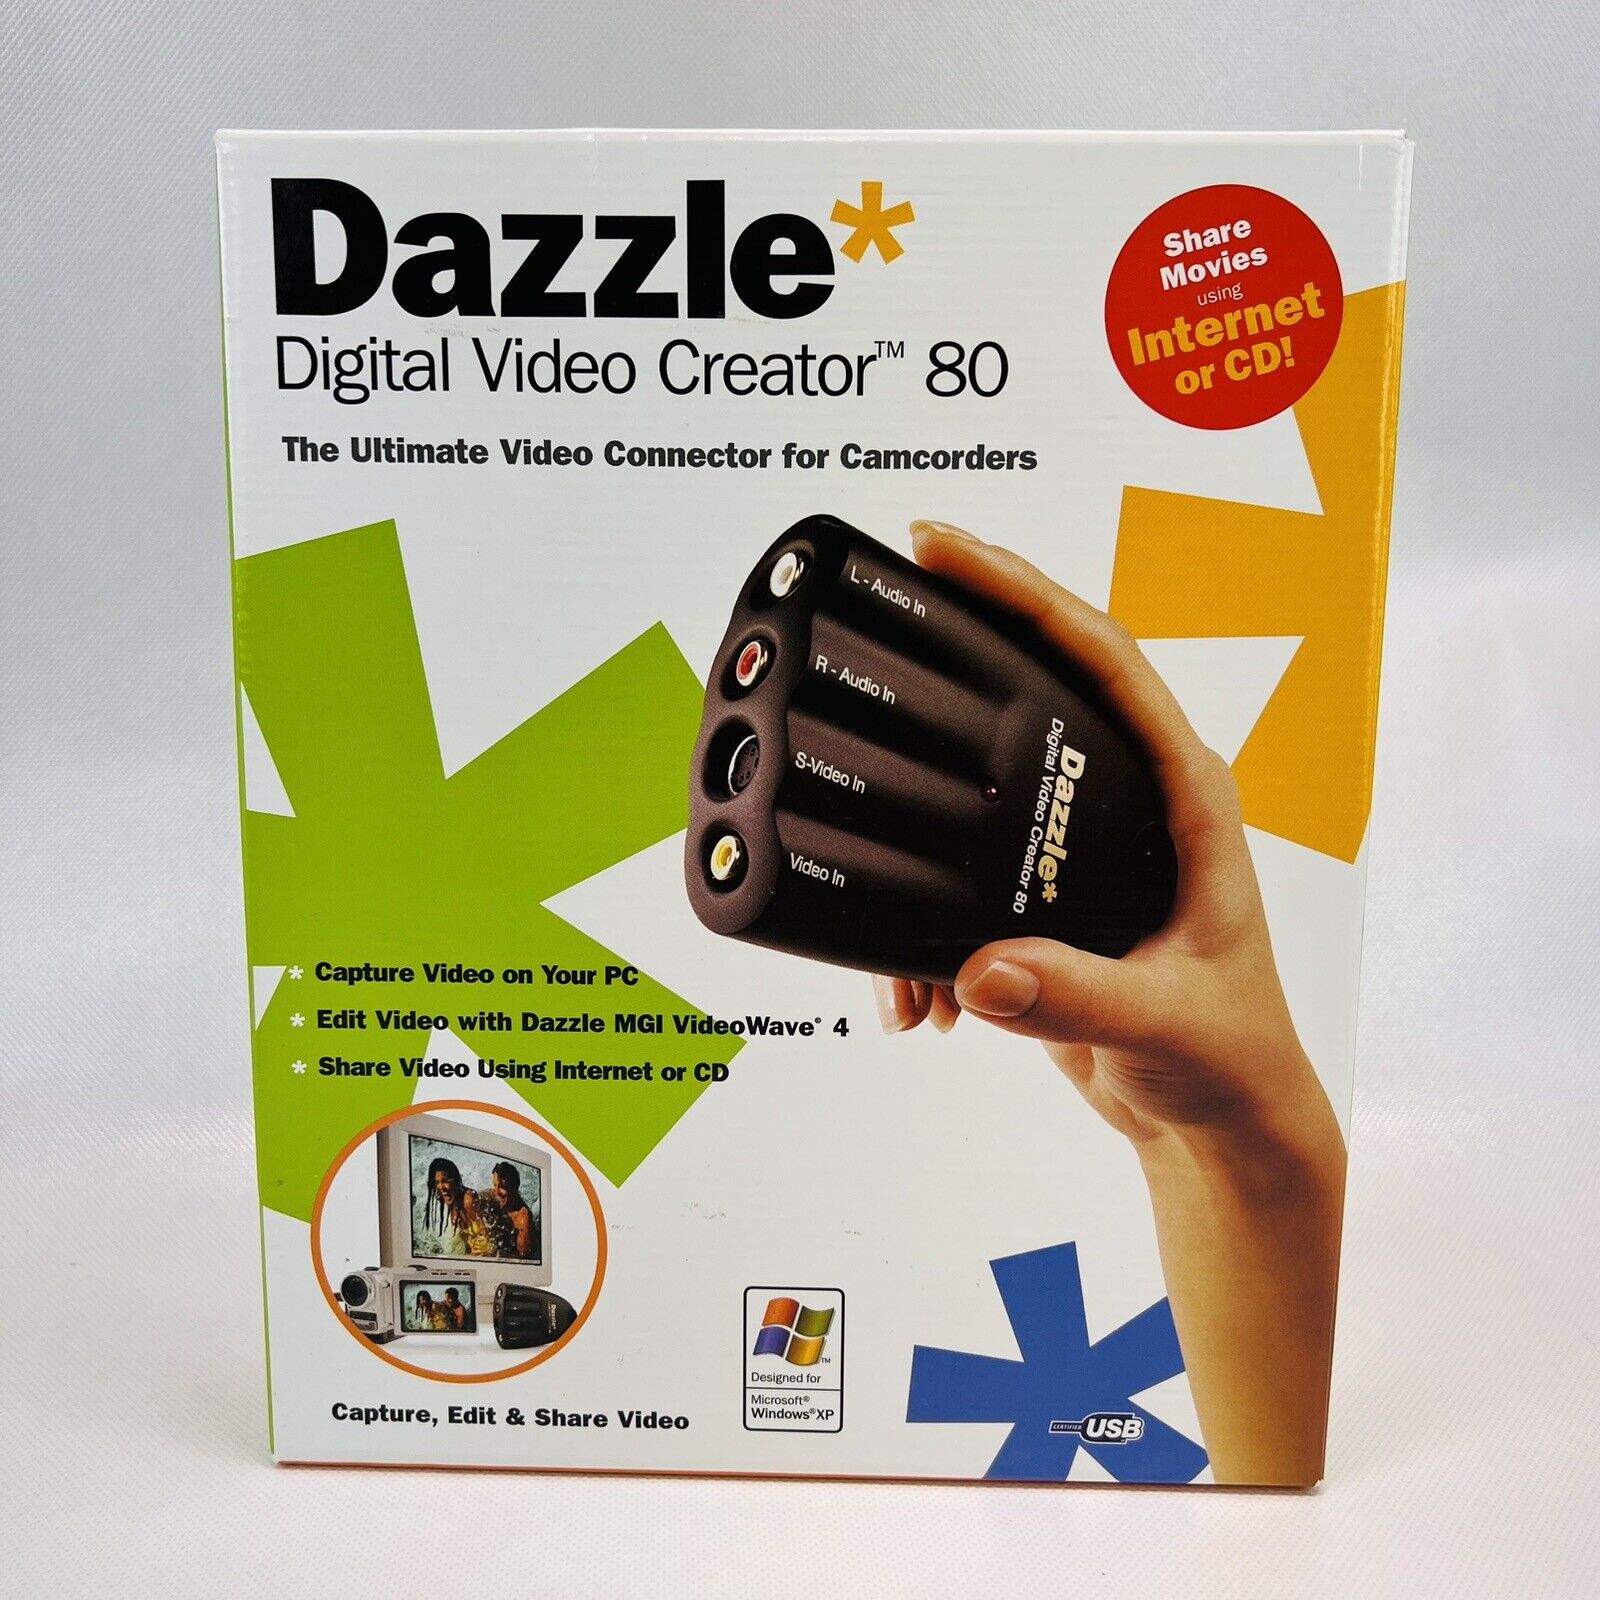 Dazzle Digital Video Creator 80 Includes Installation Disc & Quick Start Guide